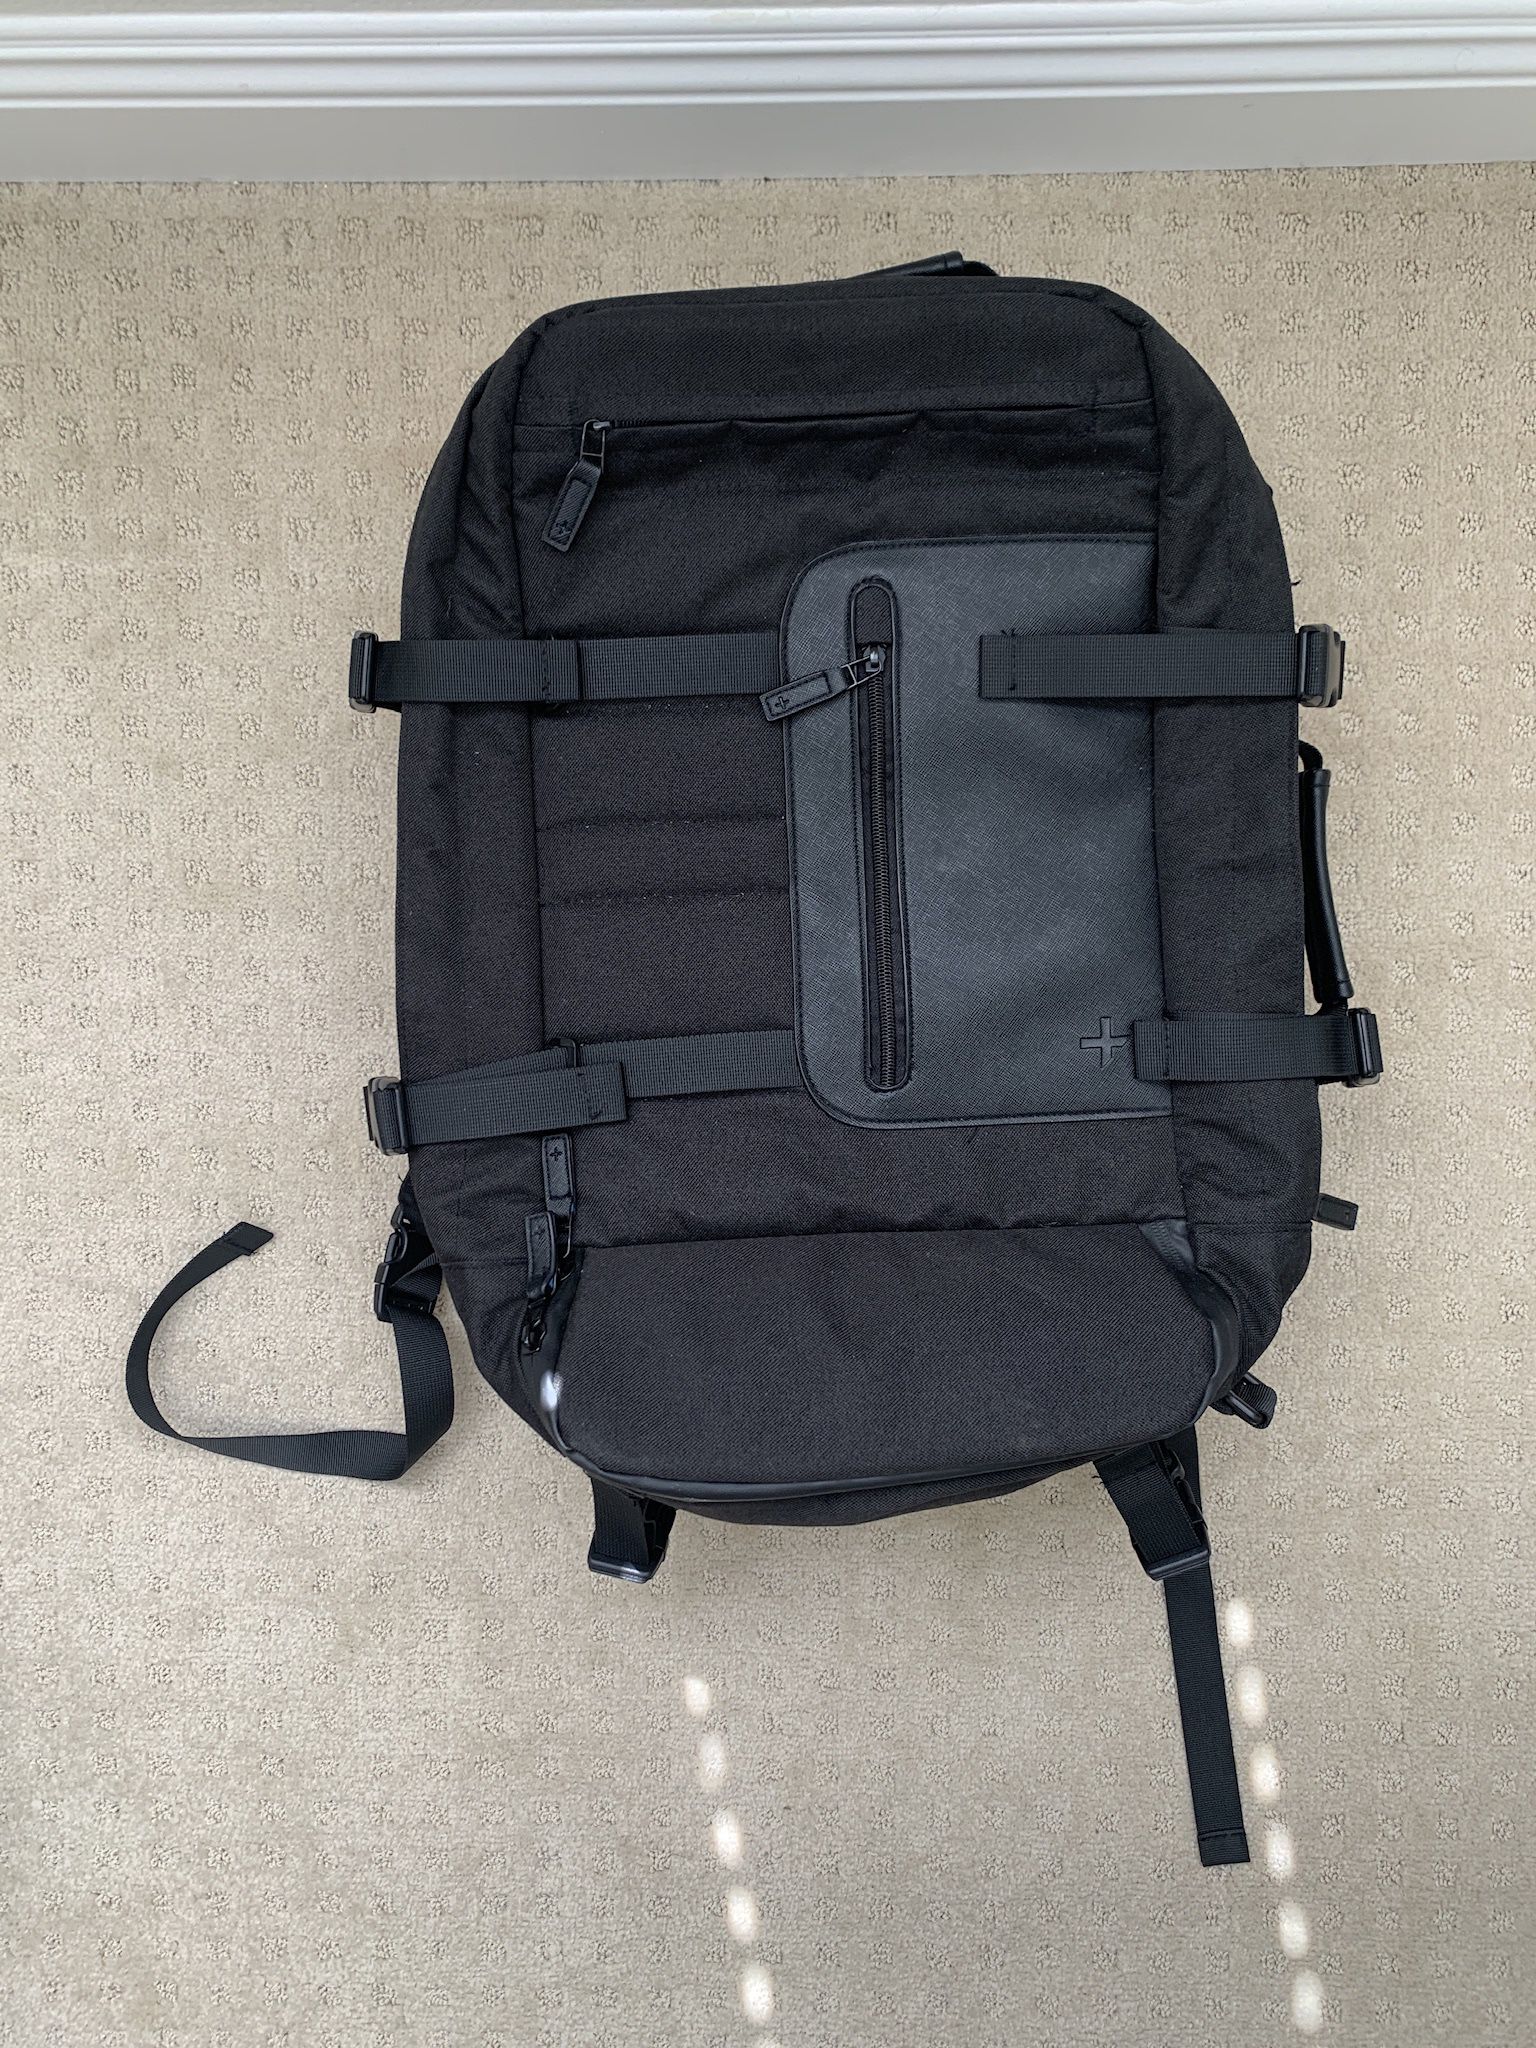 brand new tavik sett travel/hiking black backpack duffle